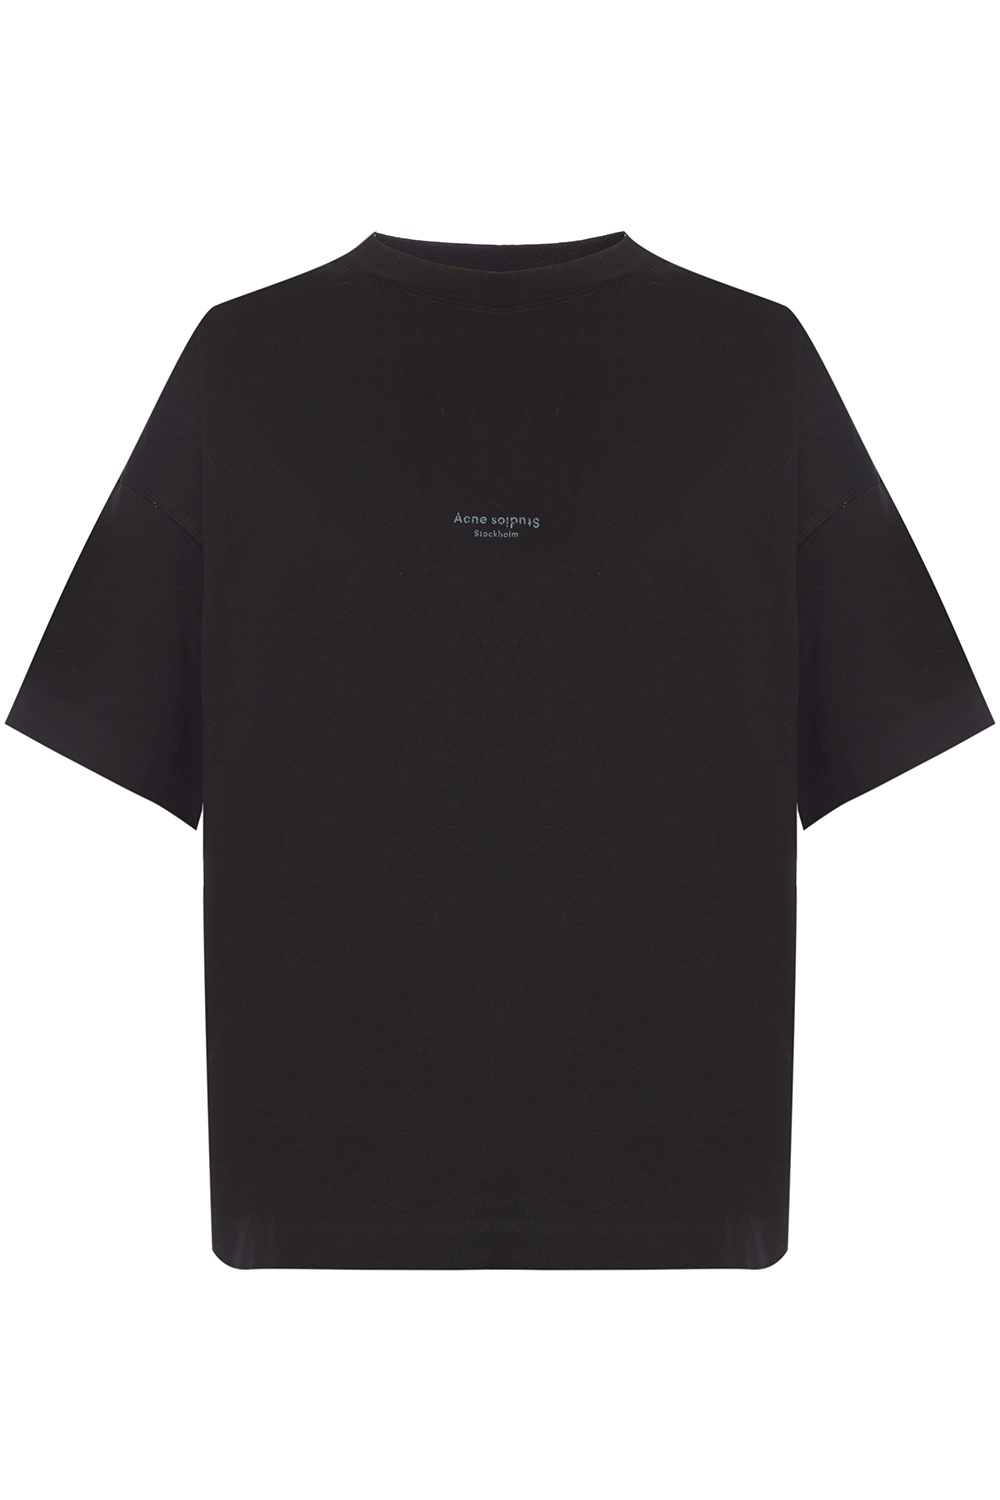 CHANEL Silk Shirt CC Logo Cufflinks Fuchsia-Black 1990's - Chelsea Vintage  Couture